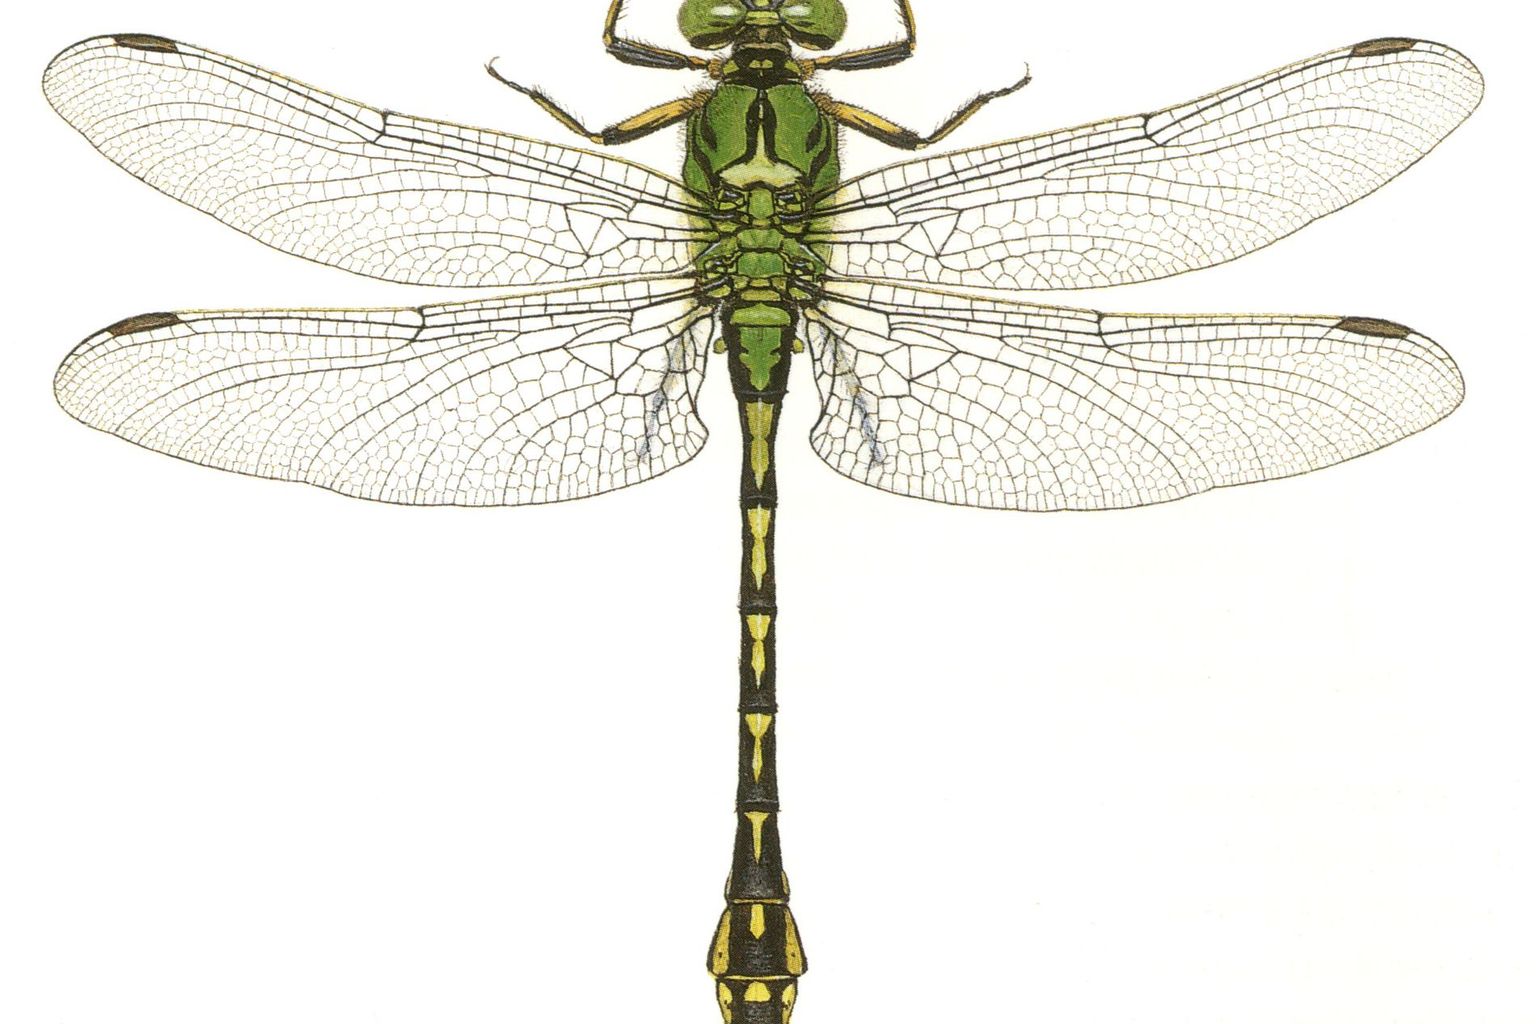 Grüne Keiljungfer (Ophiogomphus cecilia) - Libellenstudien von Paul-André Robert (1901–1977) - Würdigung des Künstlers in Fauna Helvetica, Band 12 (2005)